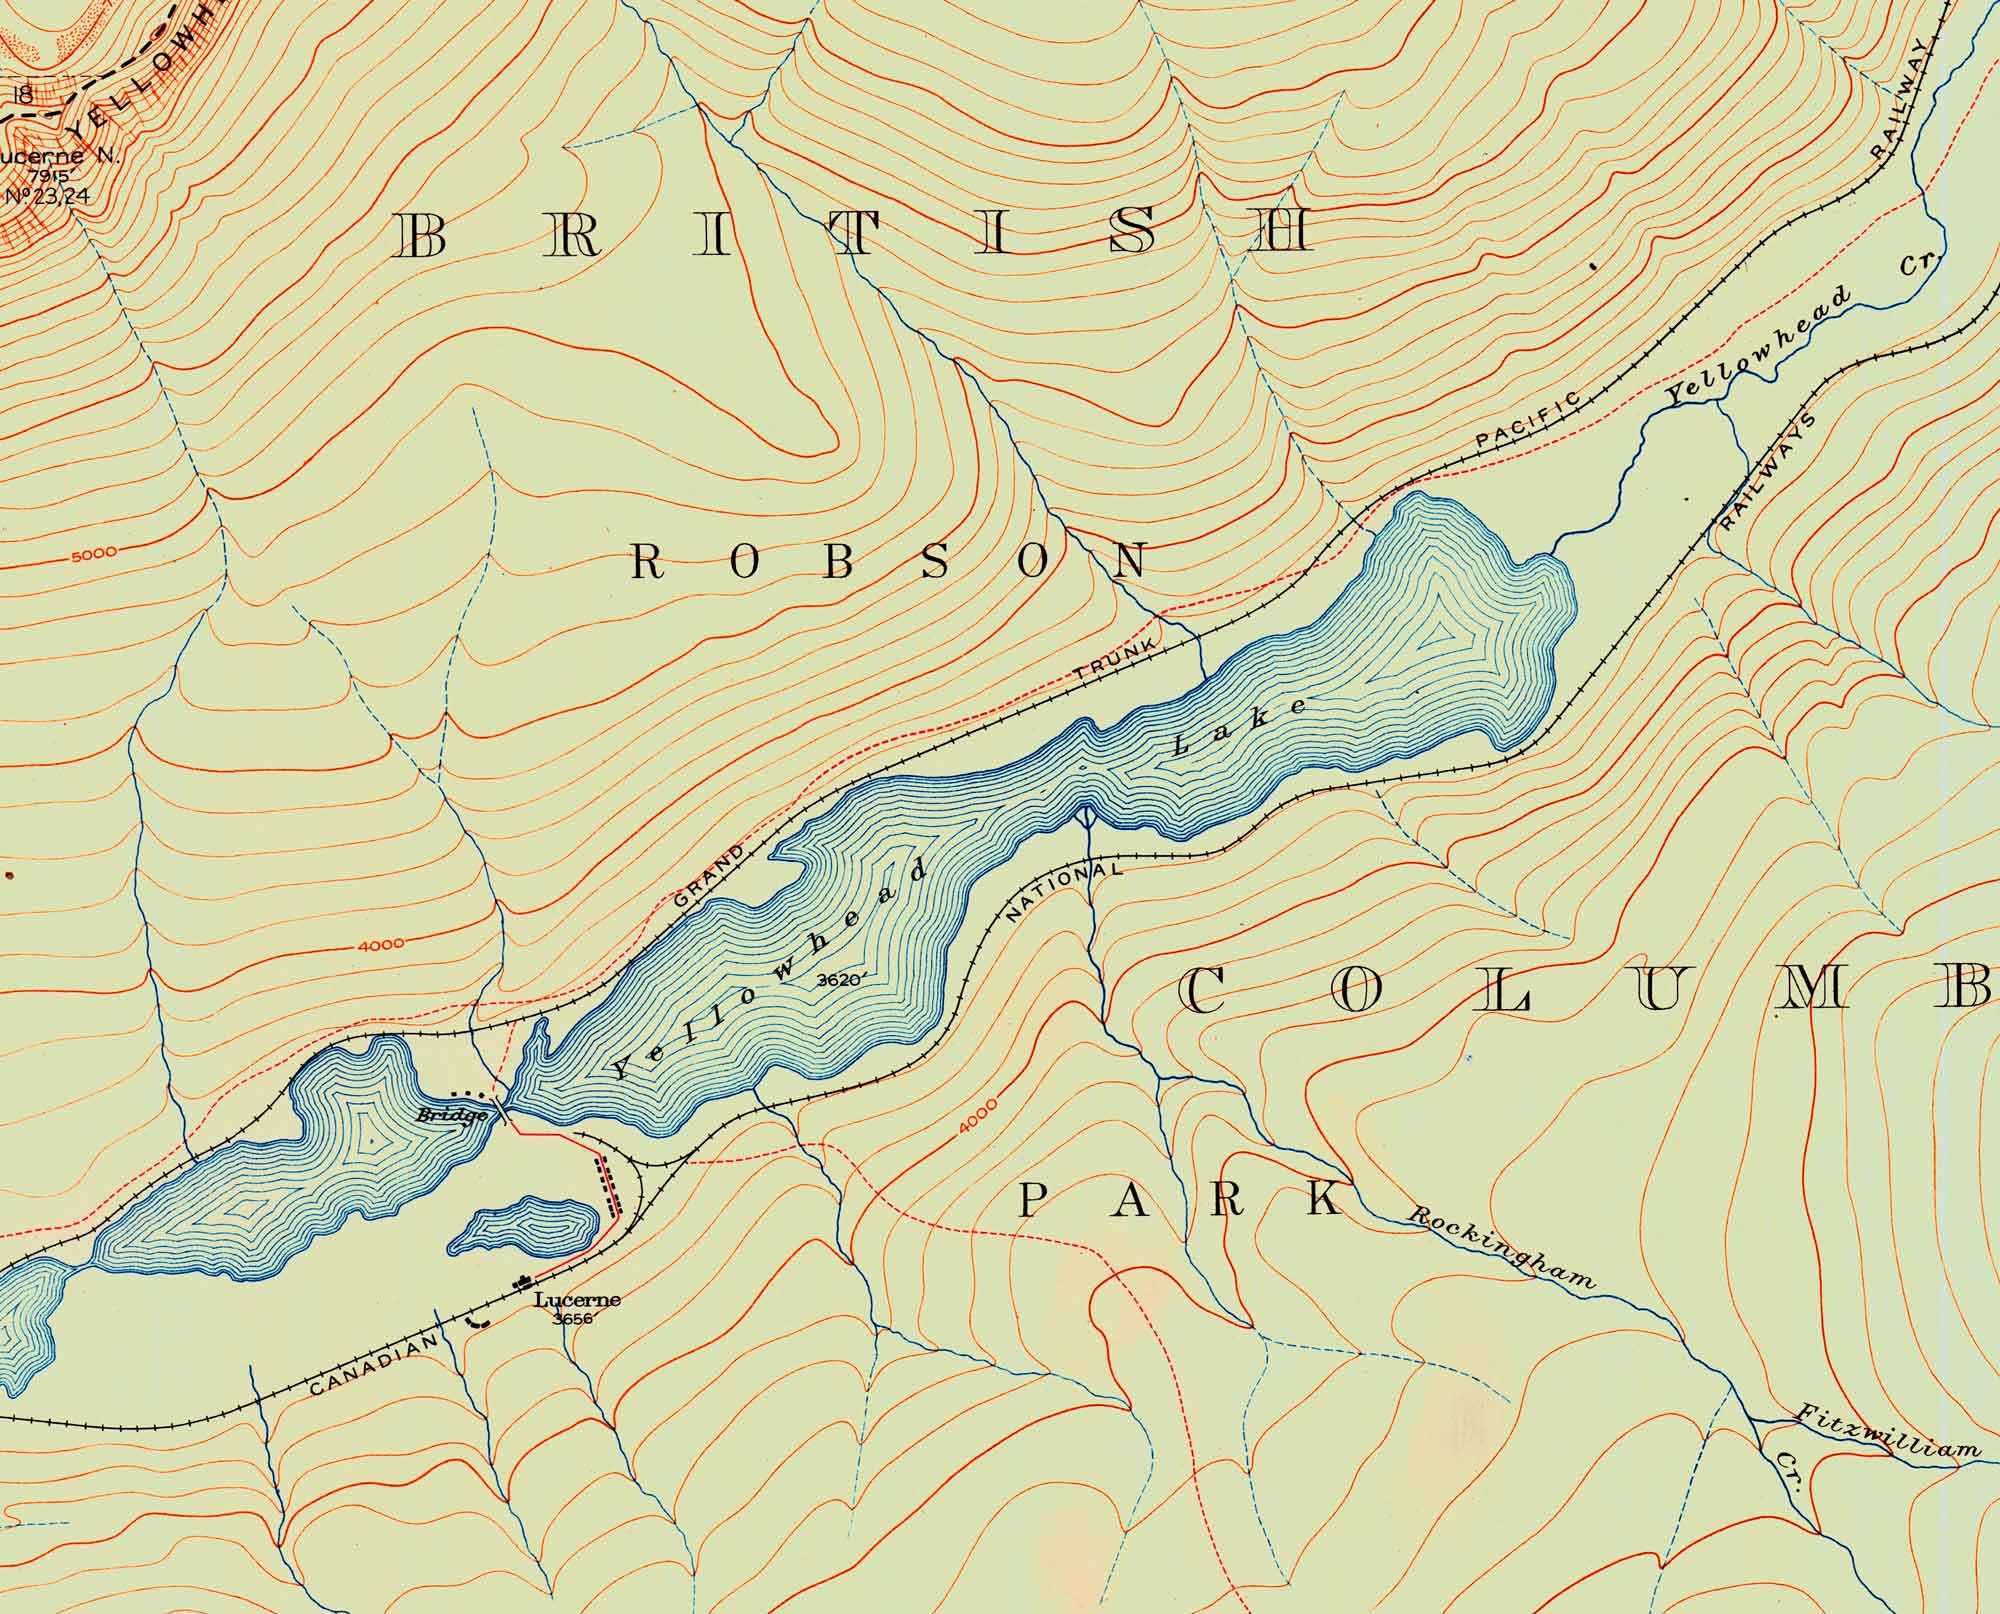 Yellowhead Lake. Surveyed in 1917. Boundary between Alberta and British Columbia. Office of the Surveyor-General, 1924